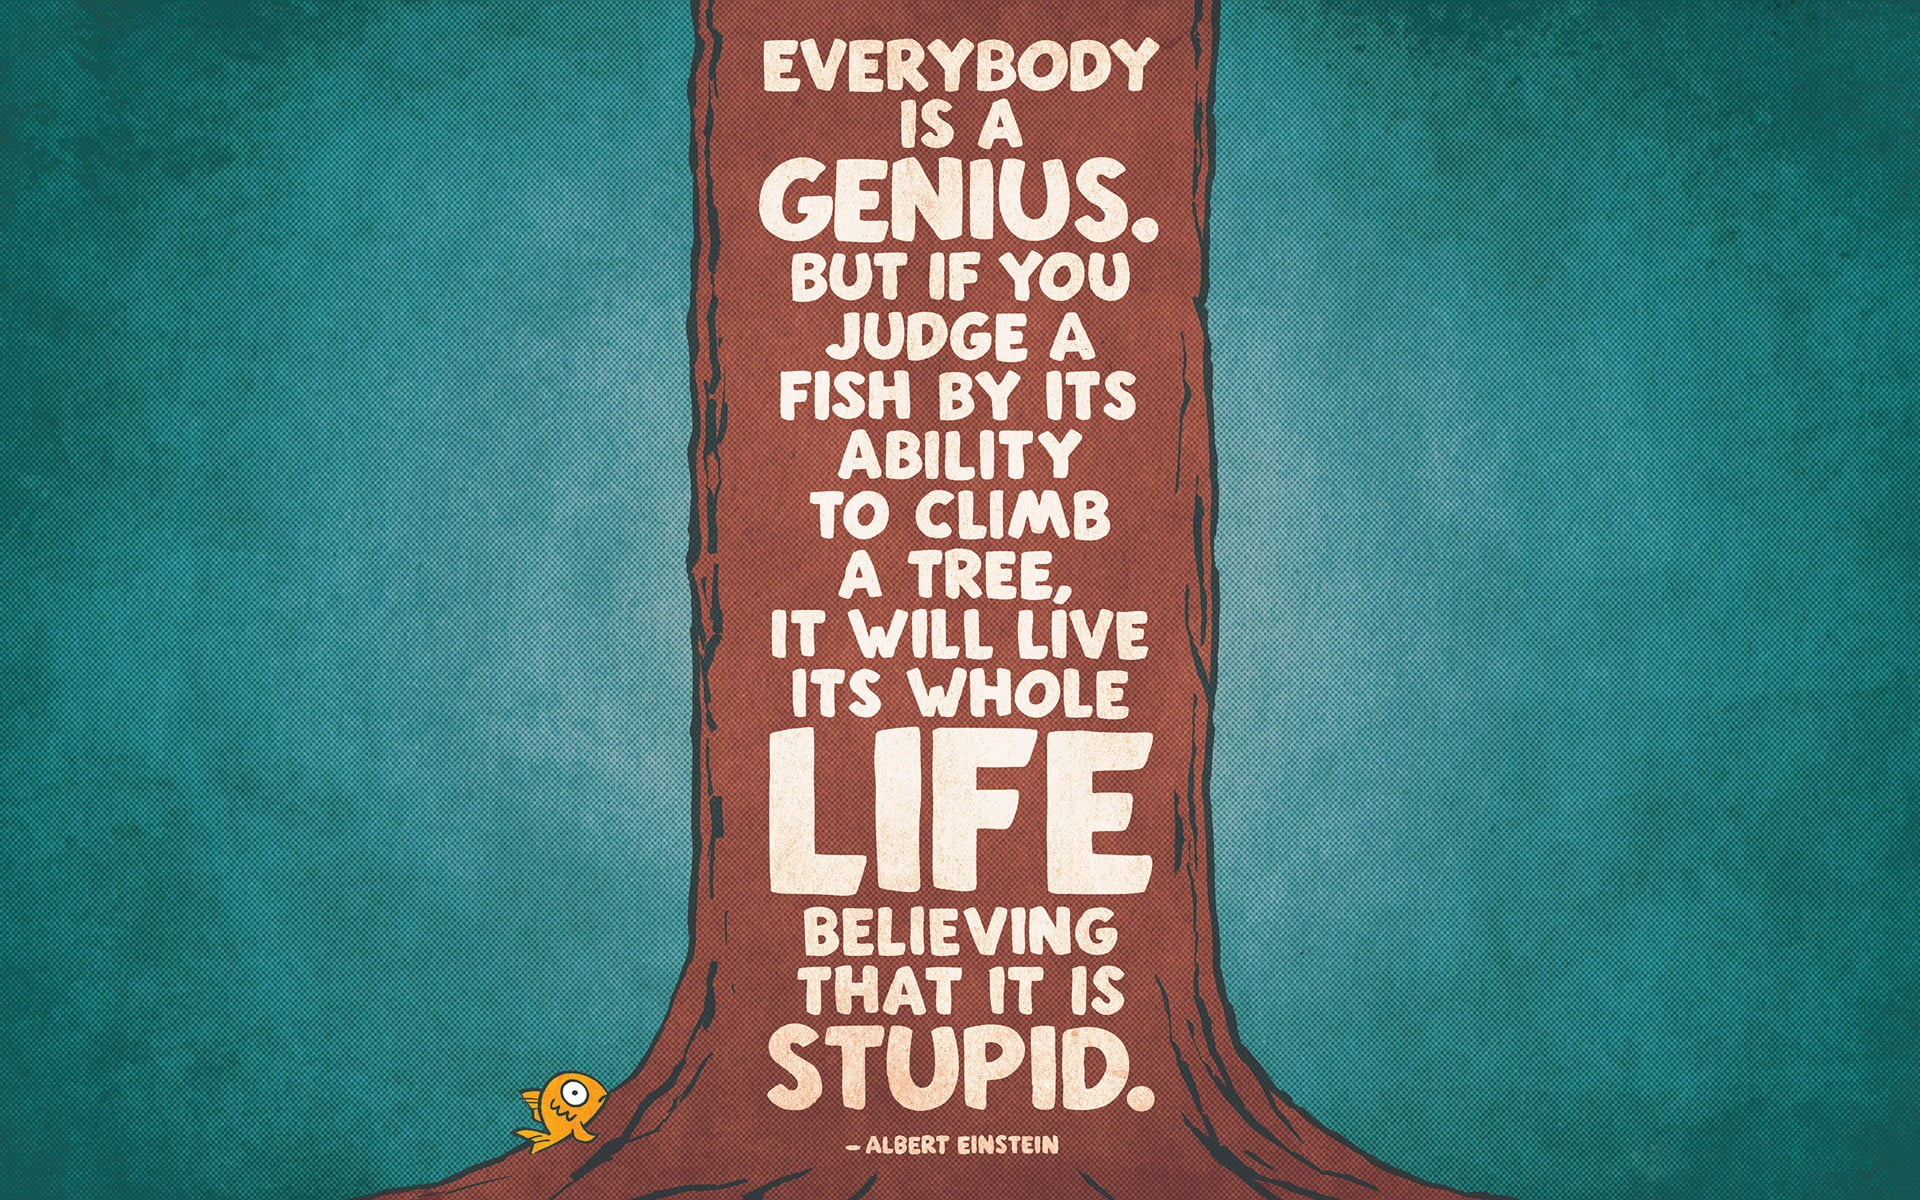 Albert Einstein quote wallpaper, everybody is a genius text, typography